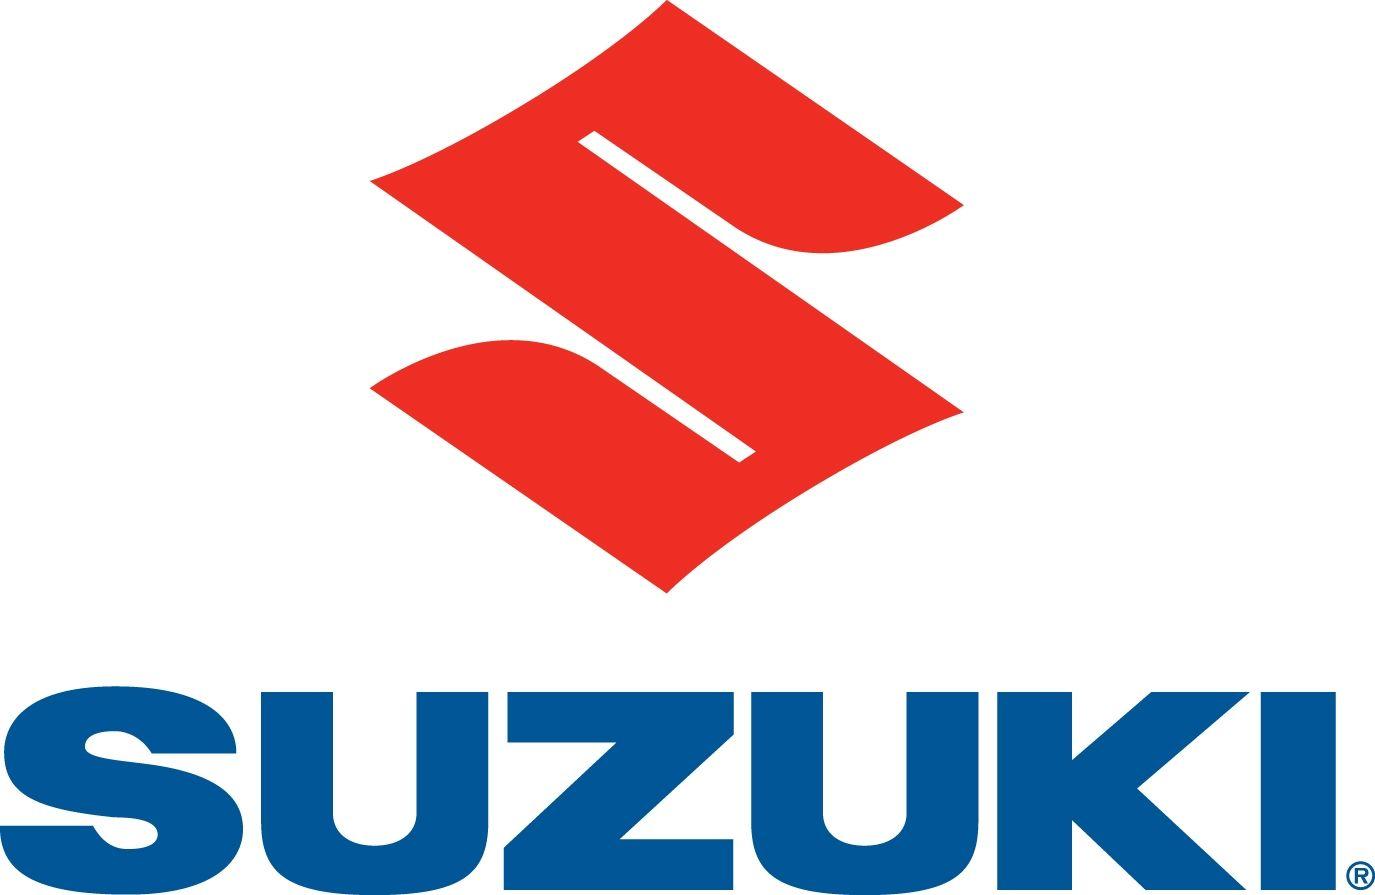 All Red for All Company Logo - Suzuki Logo, Suzuki Car Symbol Meaning and History. Car Brand Names.com